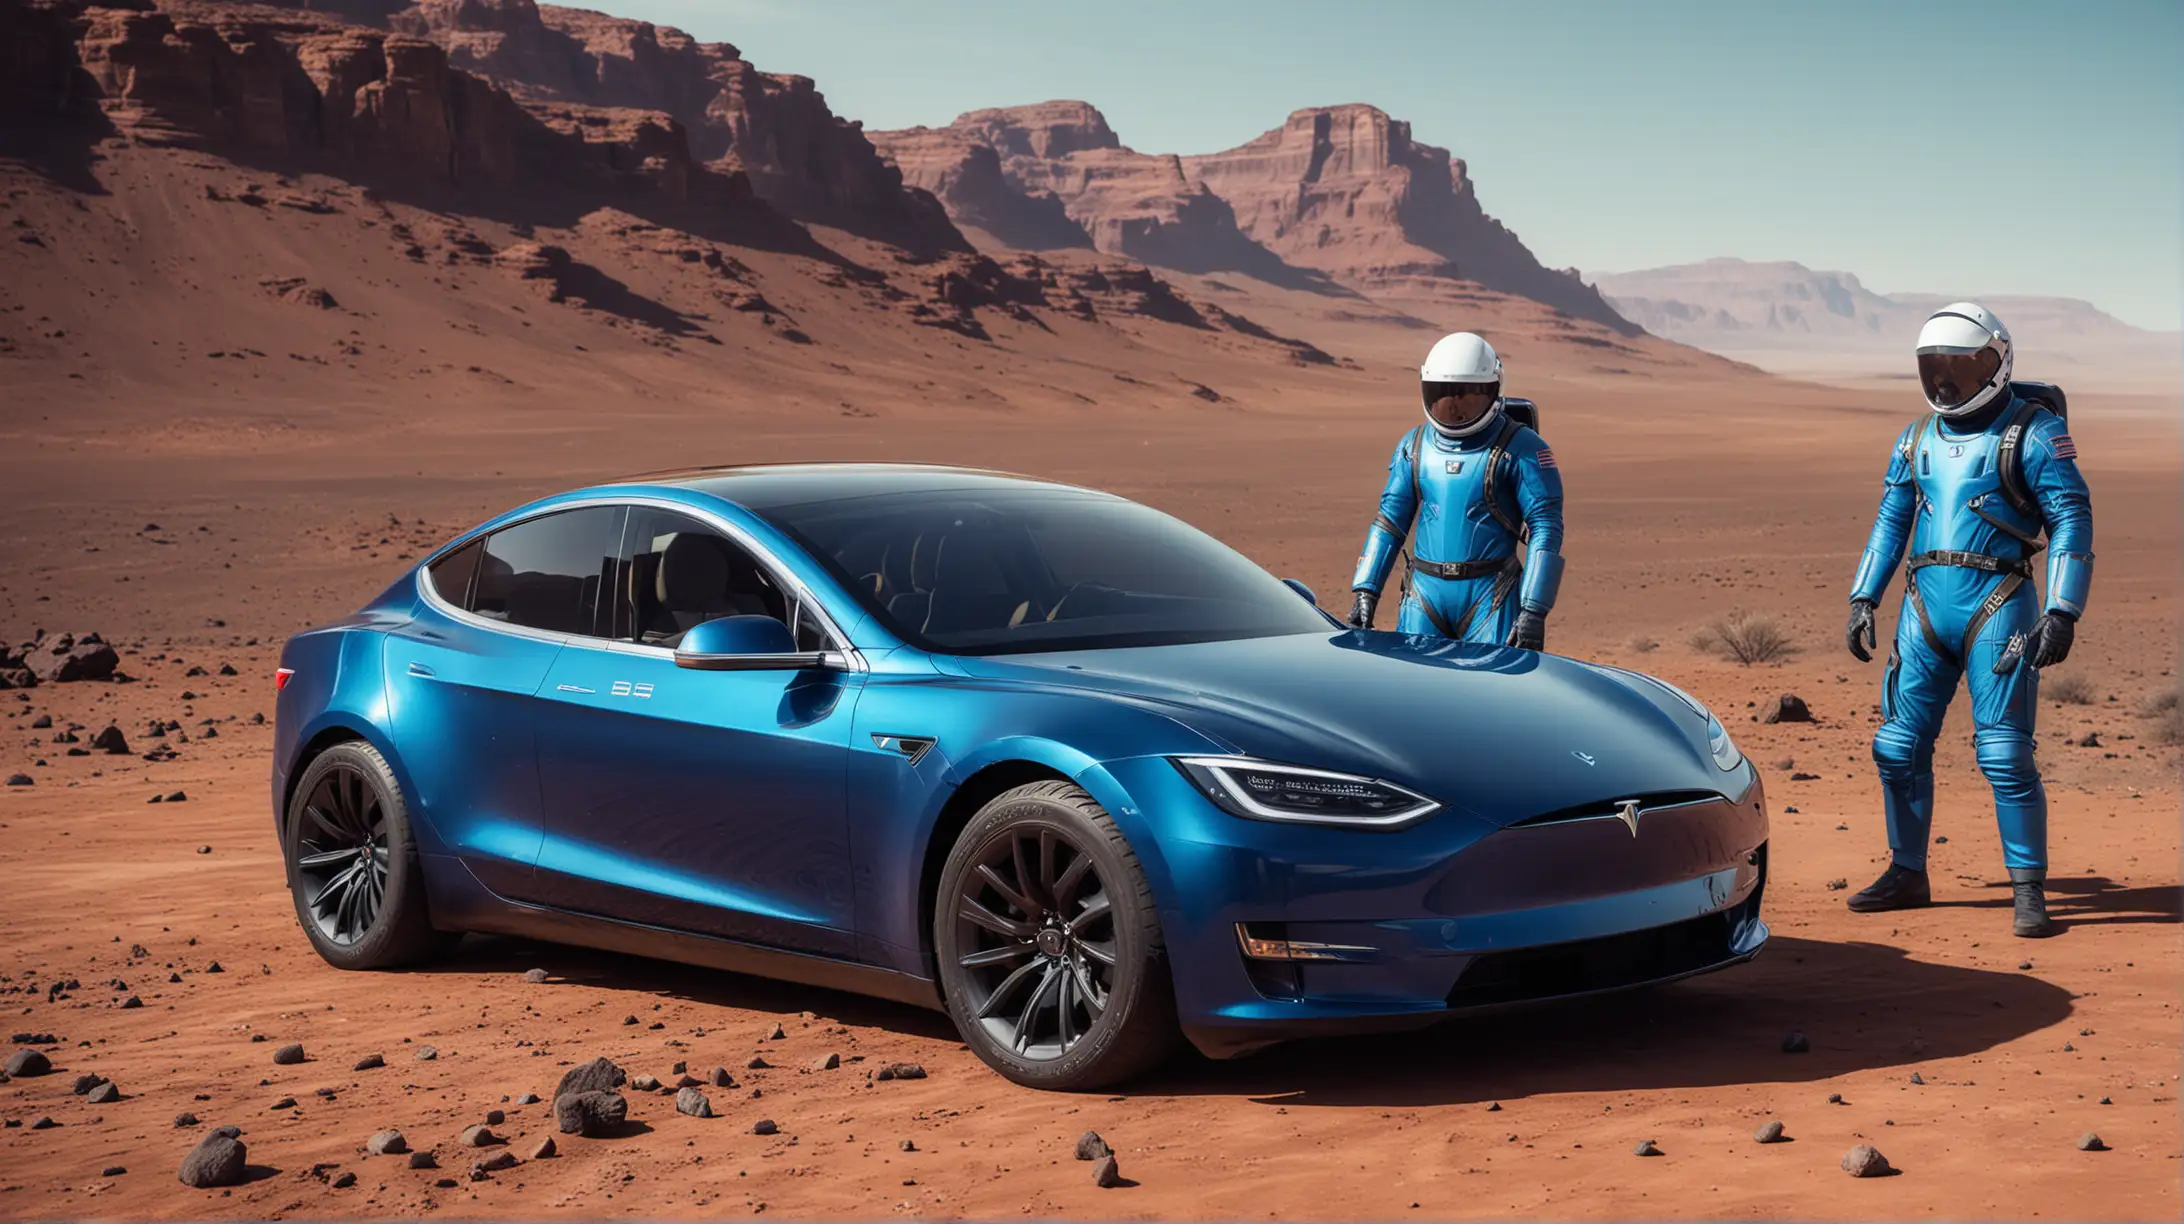 Exploring Mars Blue Tesla 3 with Astronauts